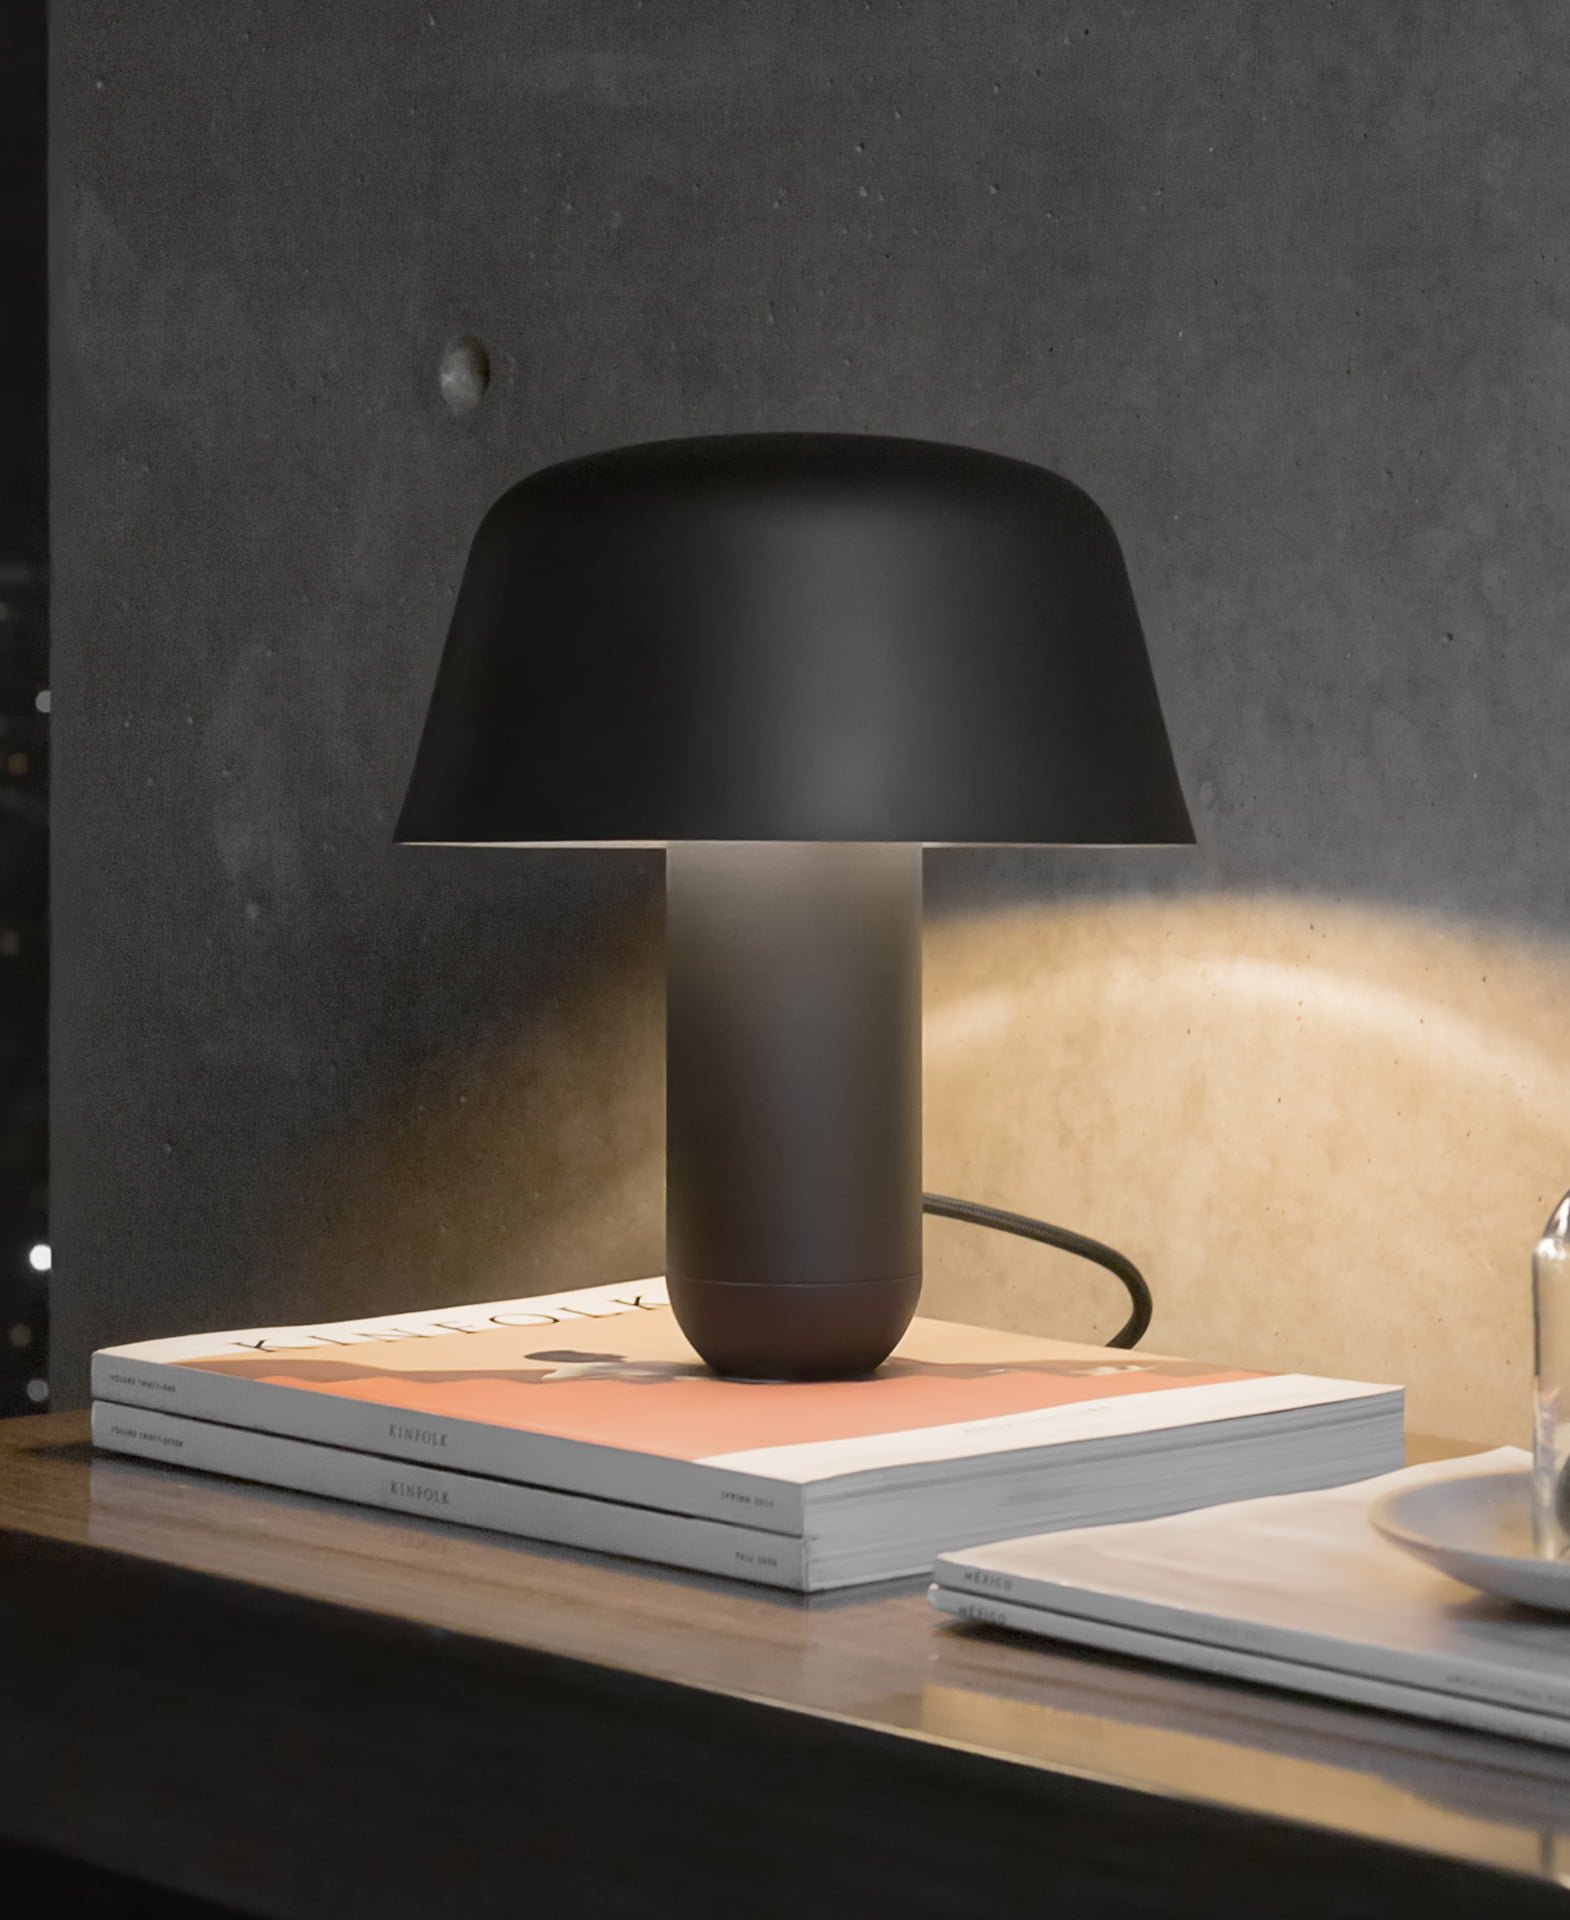 Black mushroom-shaped lamp designed by Bandido